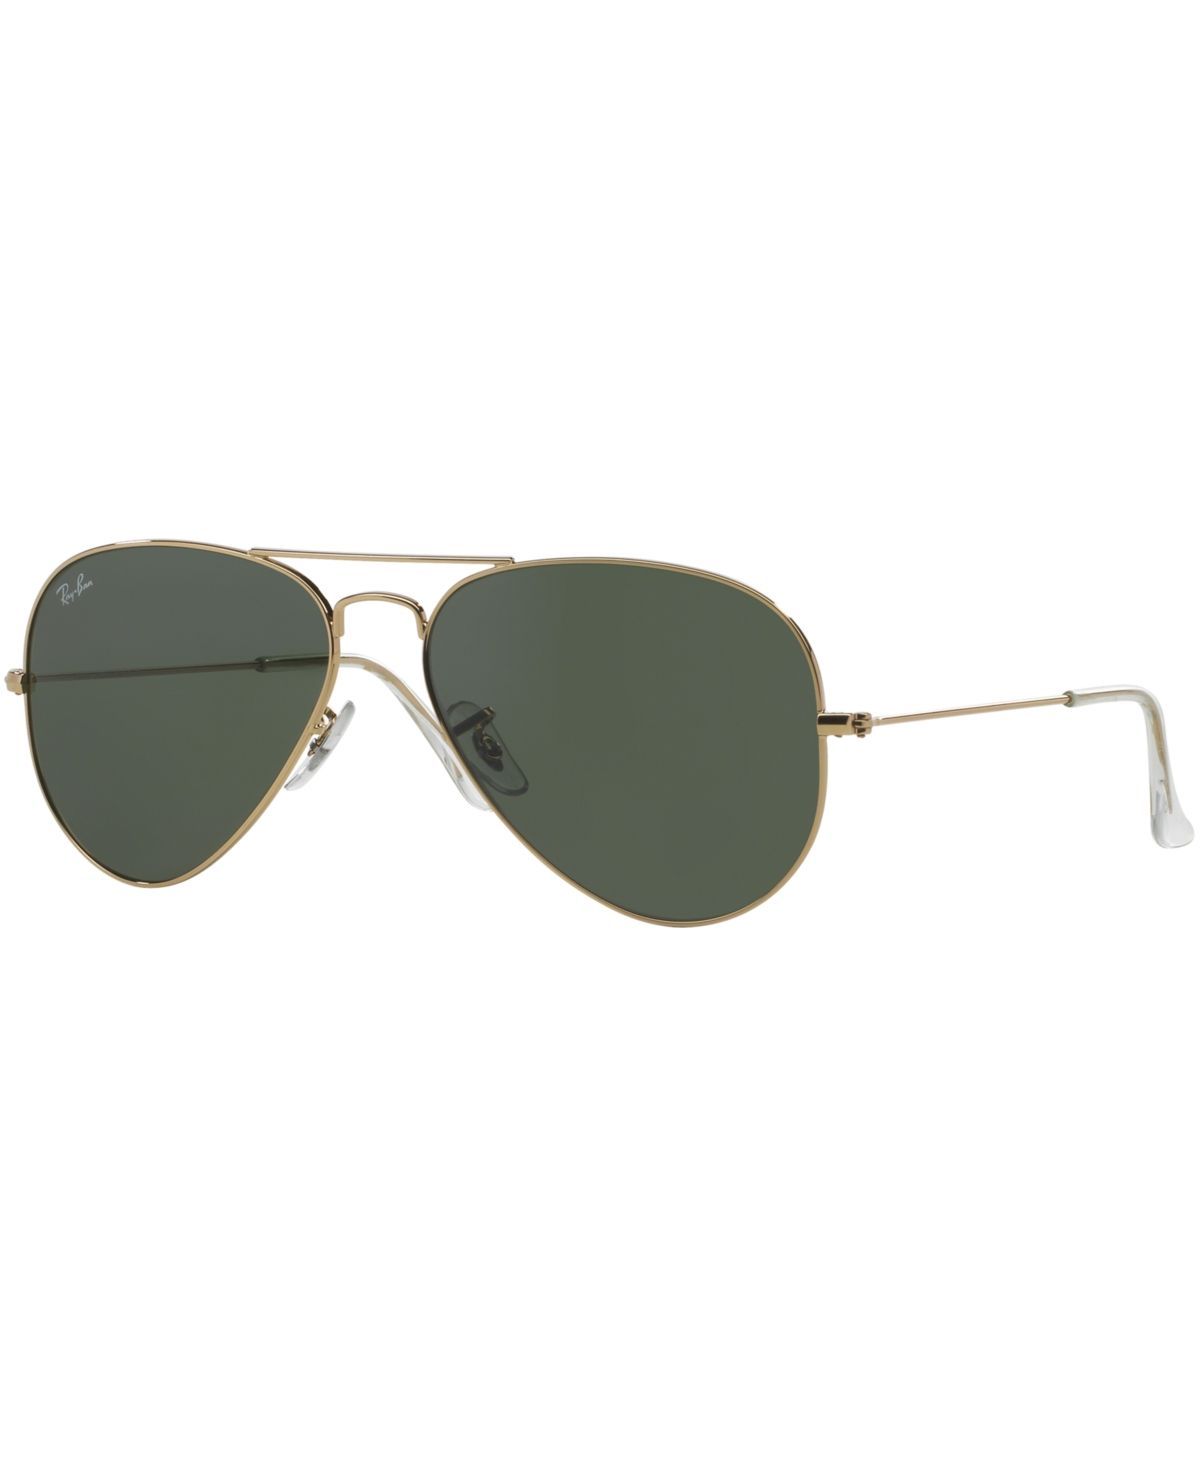 Ray-Ban Sunglasses, RB3025 AVIATOR & Reviews - Sunglasses by Sunglass Hut - Handbags & Accessories - Macy's -   13 dress Fashion ray bans ideas